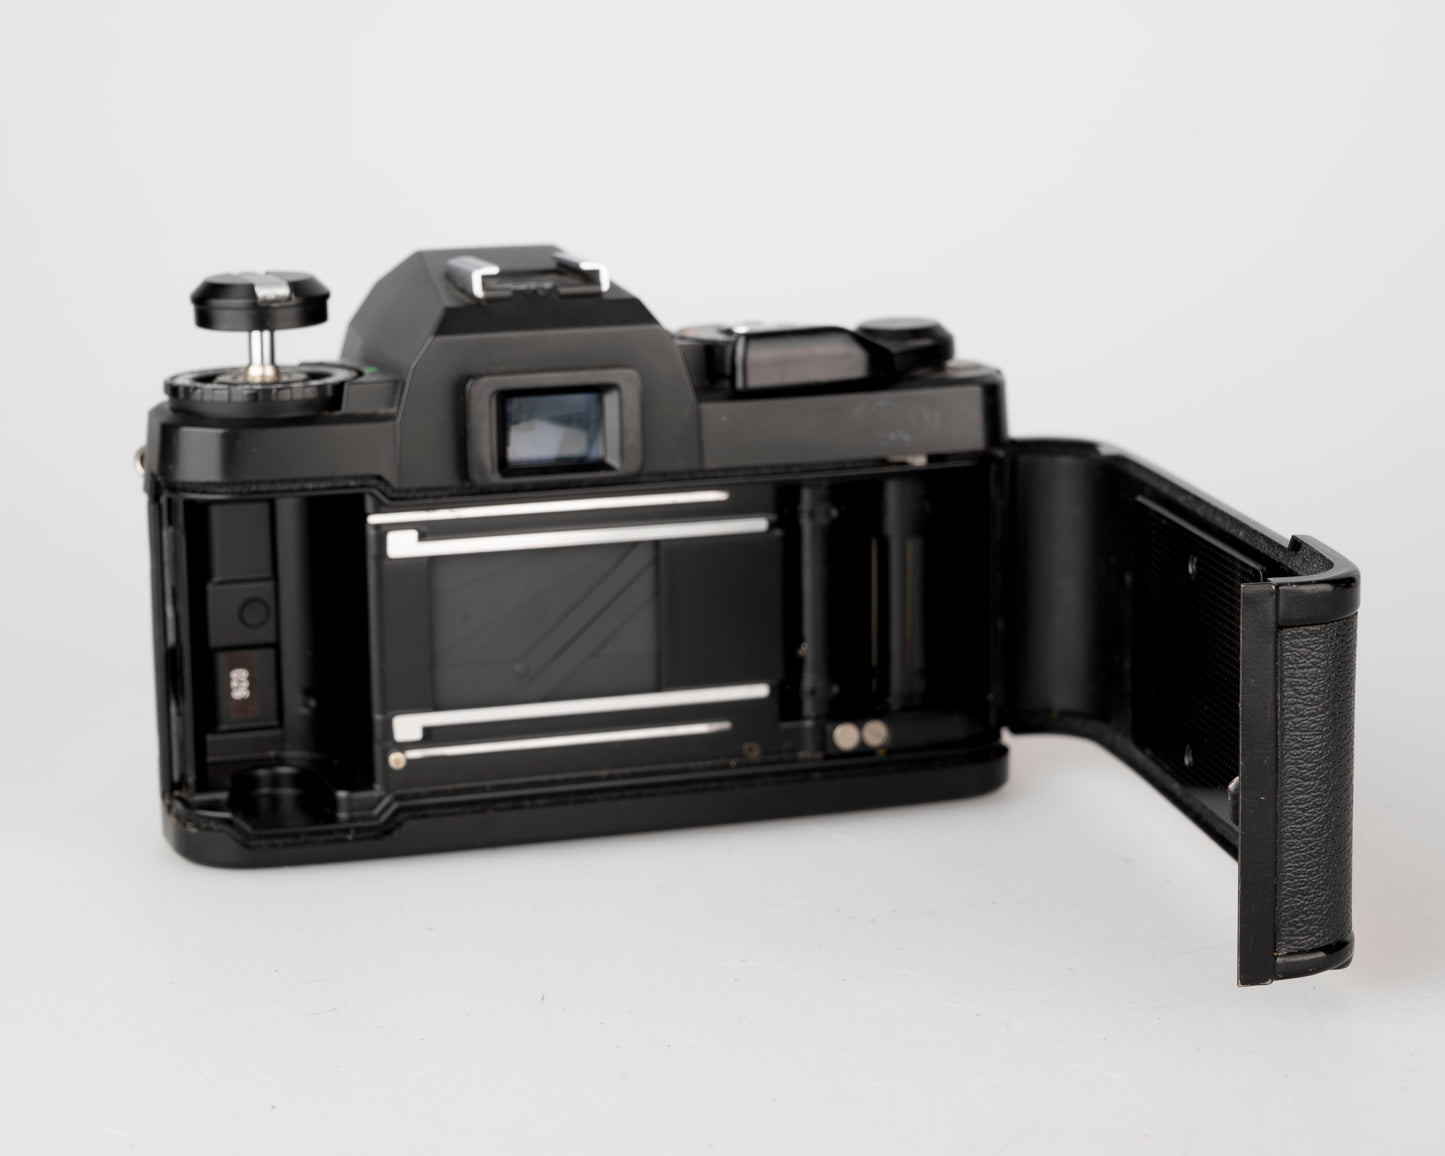 Chinon CG-5 35mm film SLR camera w/ Tokina 28mm lens (serial 324283)